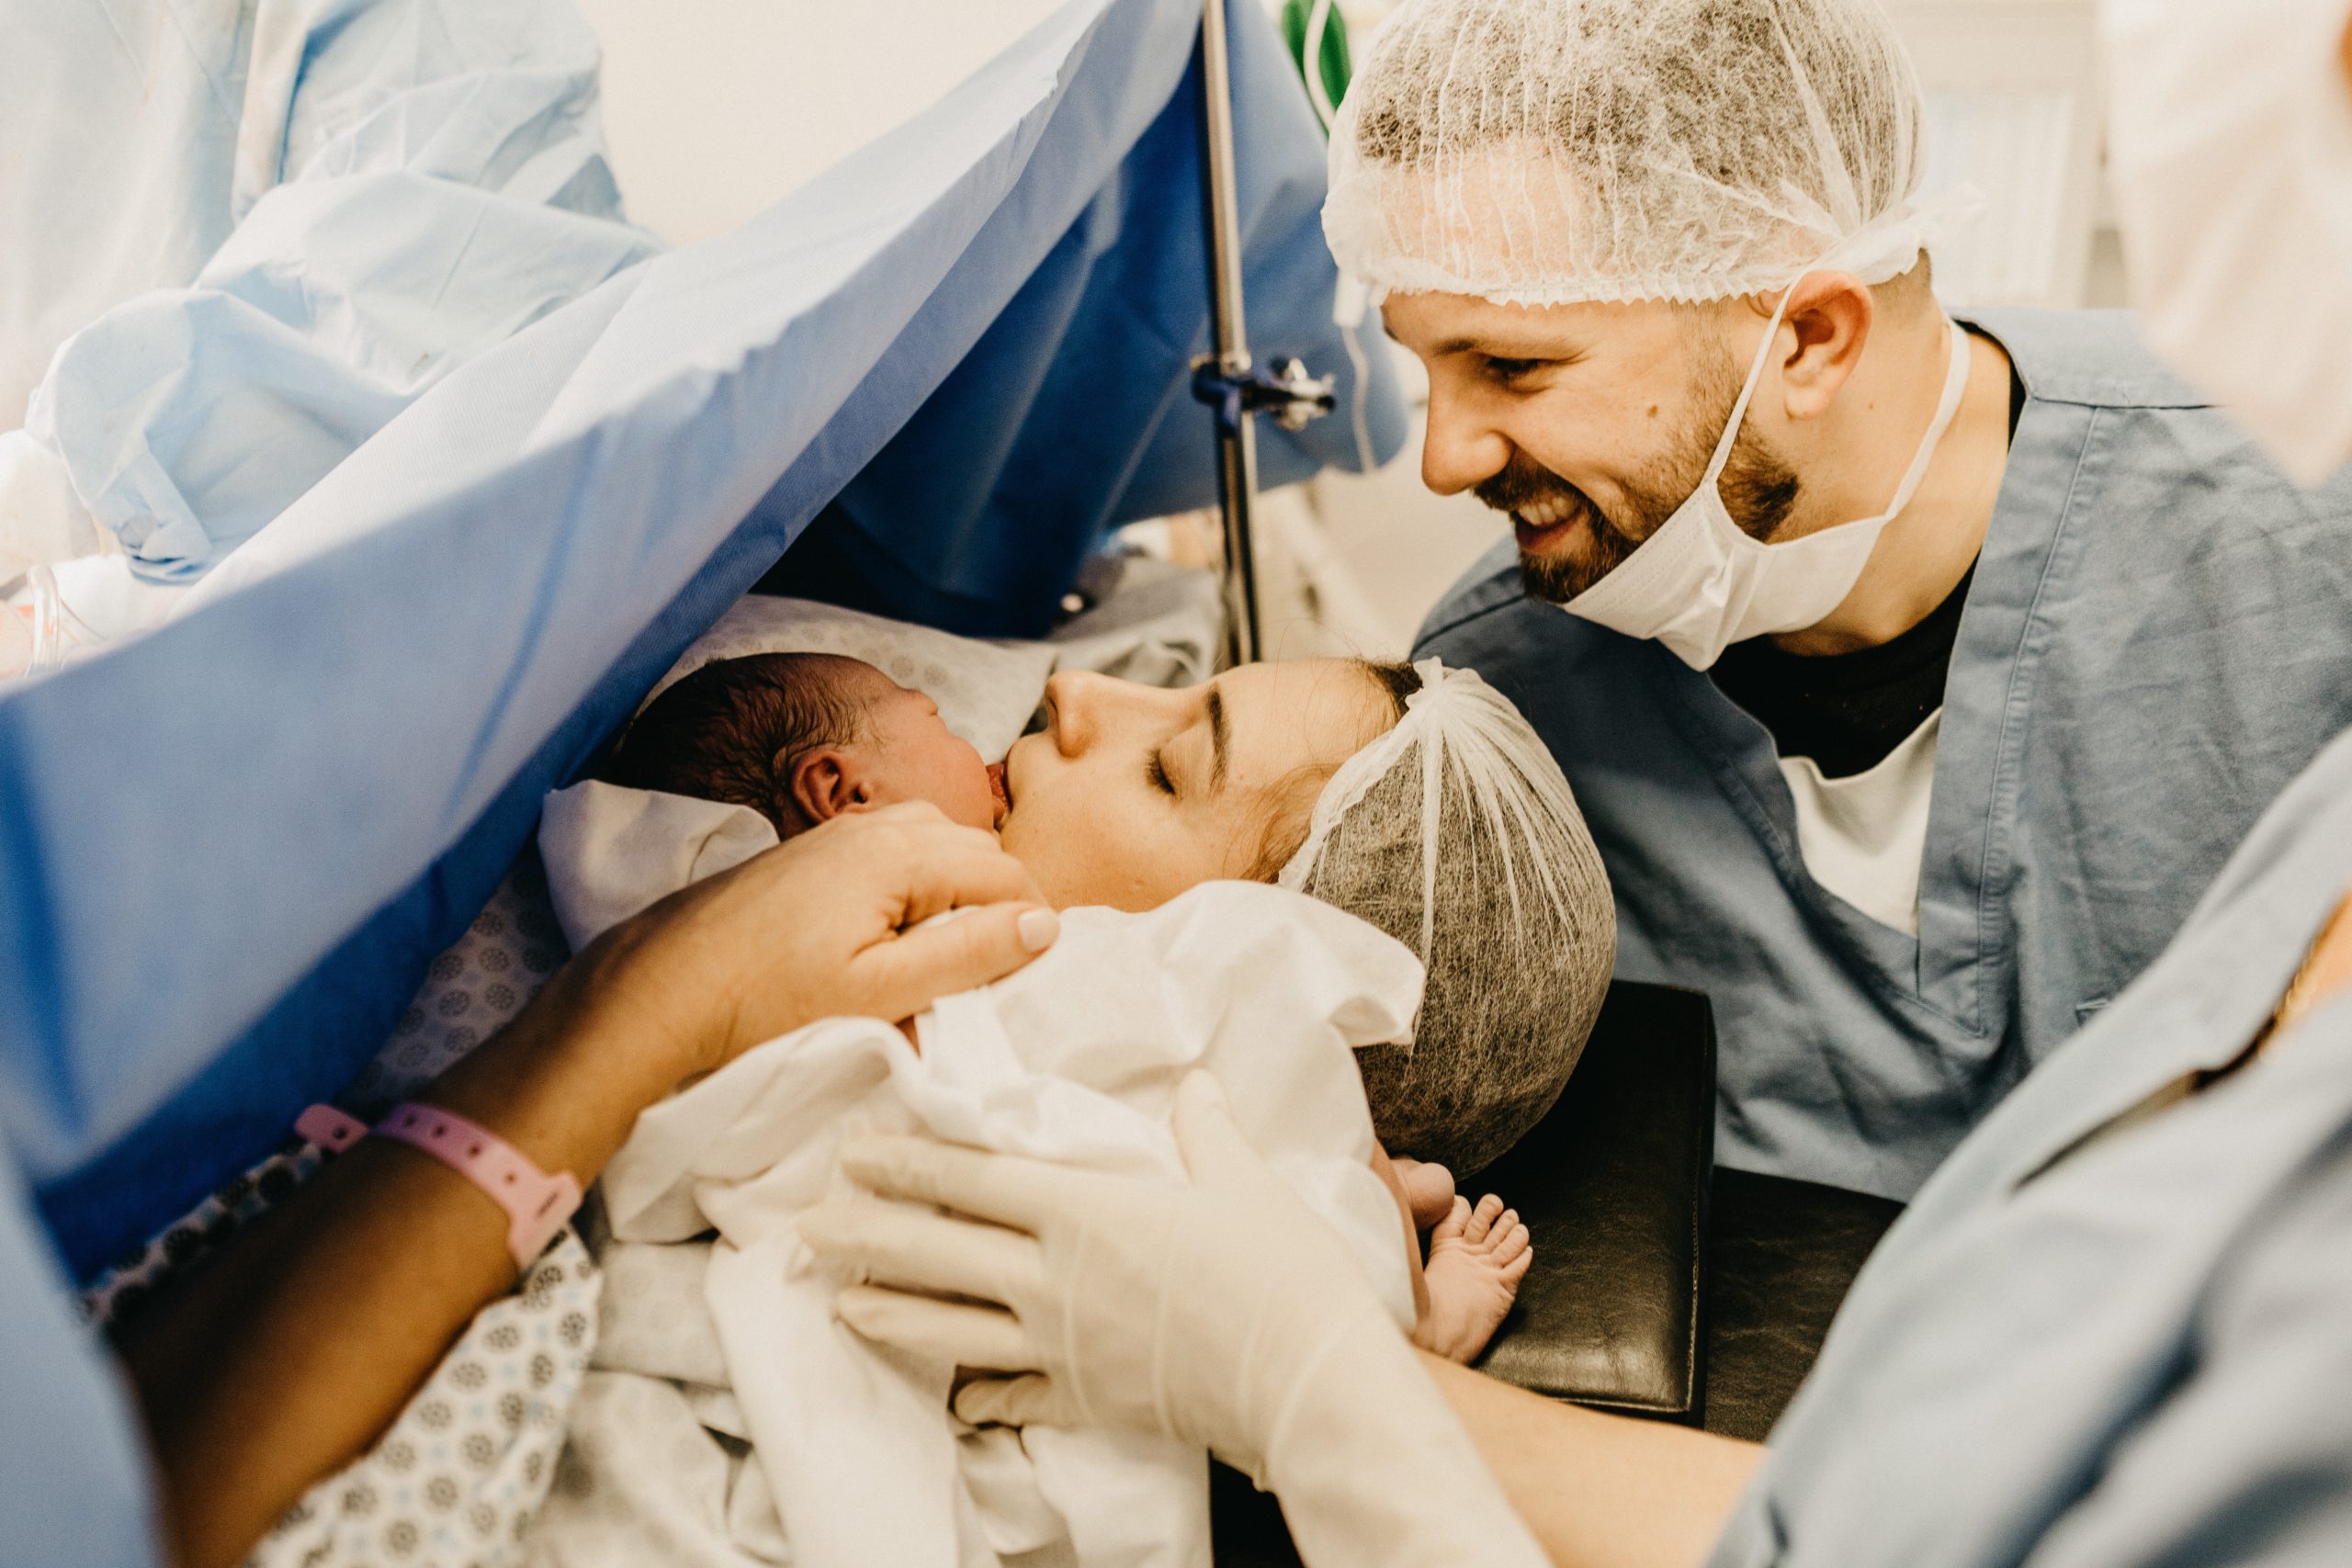 Labor and delivery nurse delivers a newborn baby